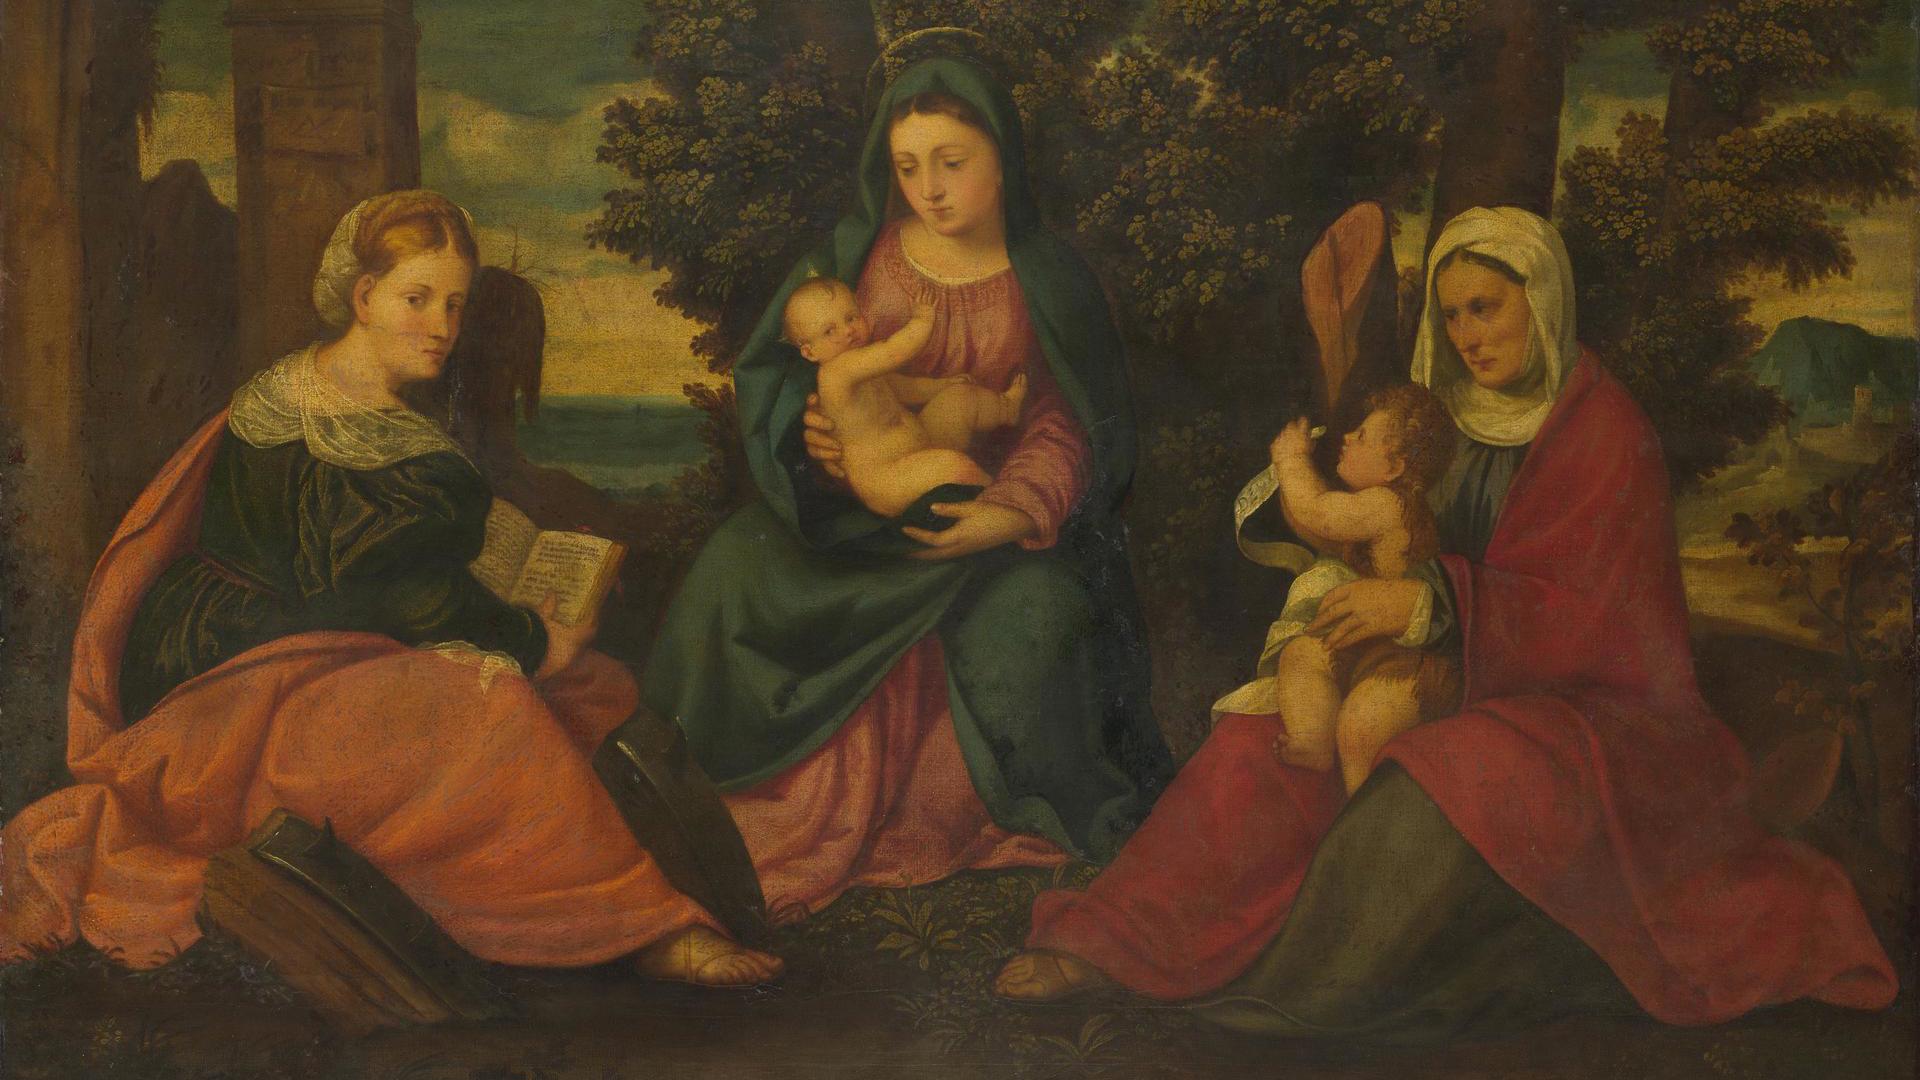 The Madonna and Child with Saints by Style of Bonifazio di Pitati